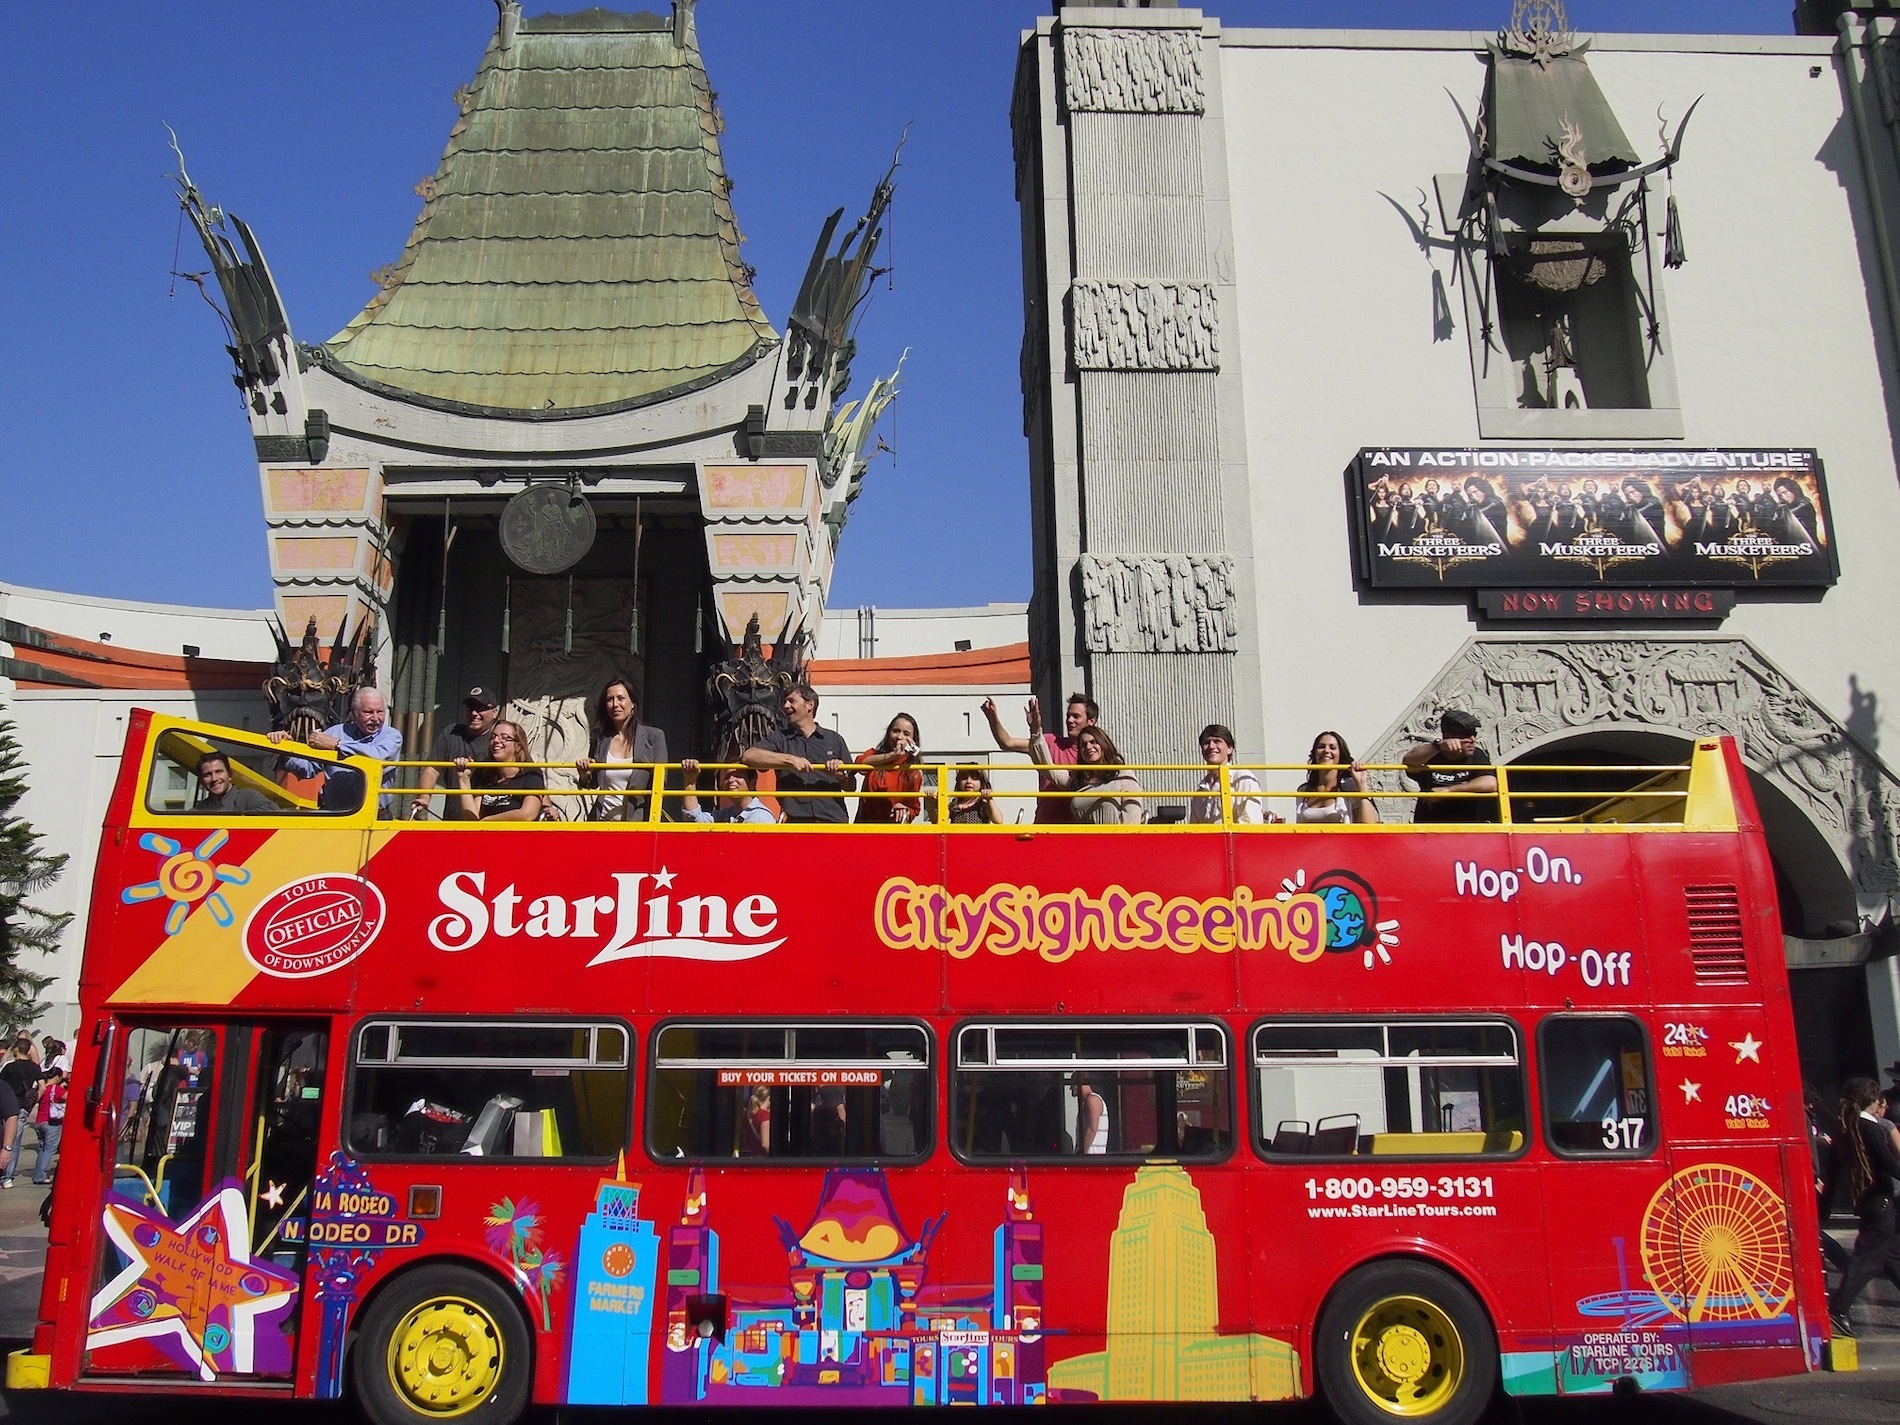 Starline-CitySightseeing-bus-outside-Chinese-Theatre.jpg